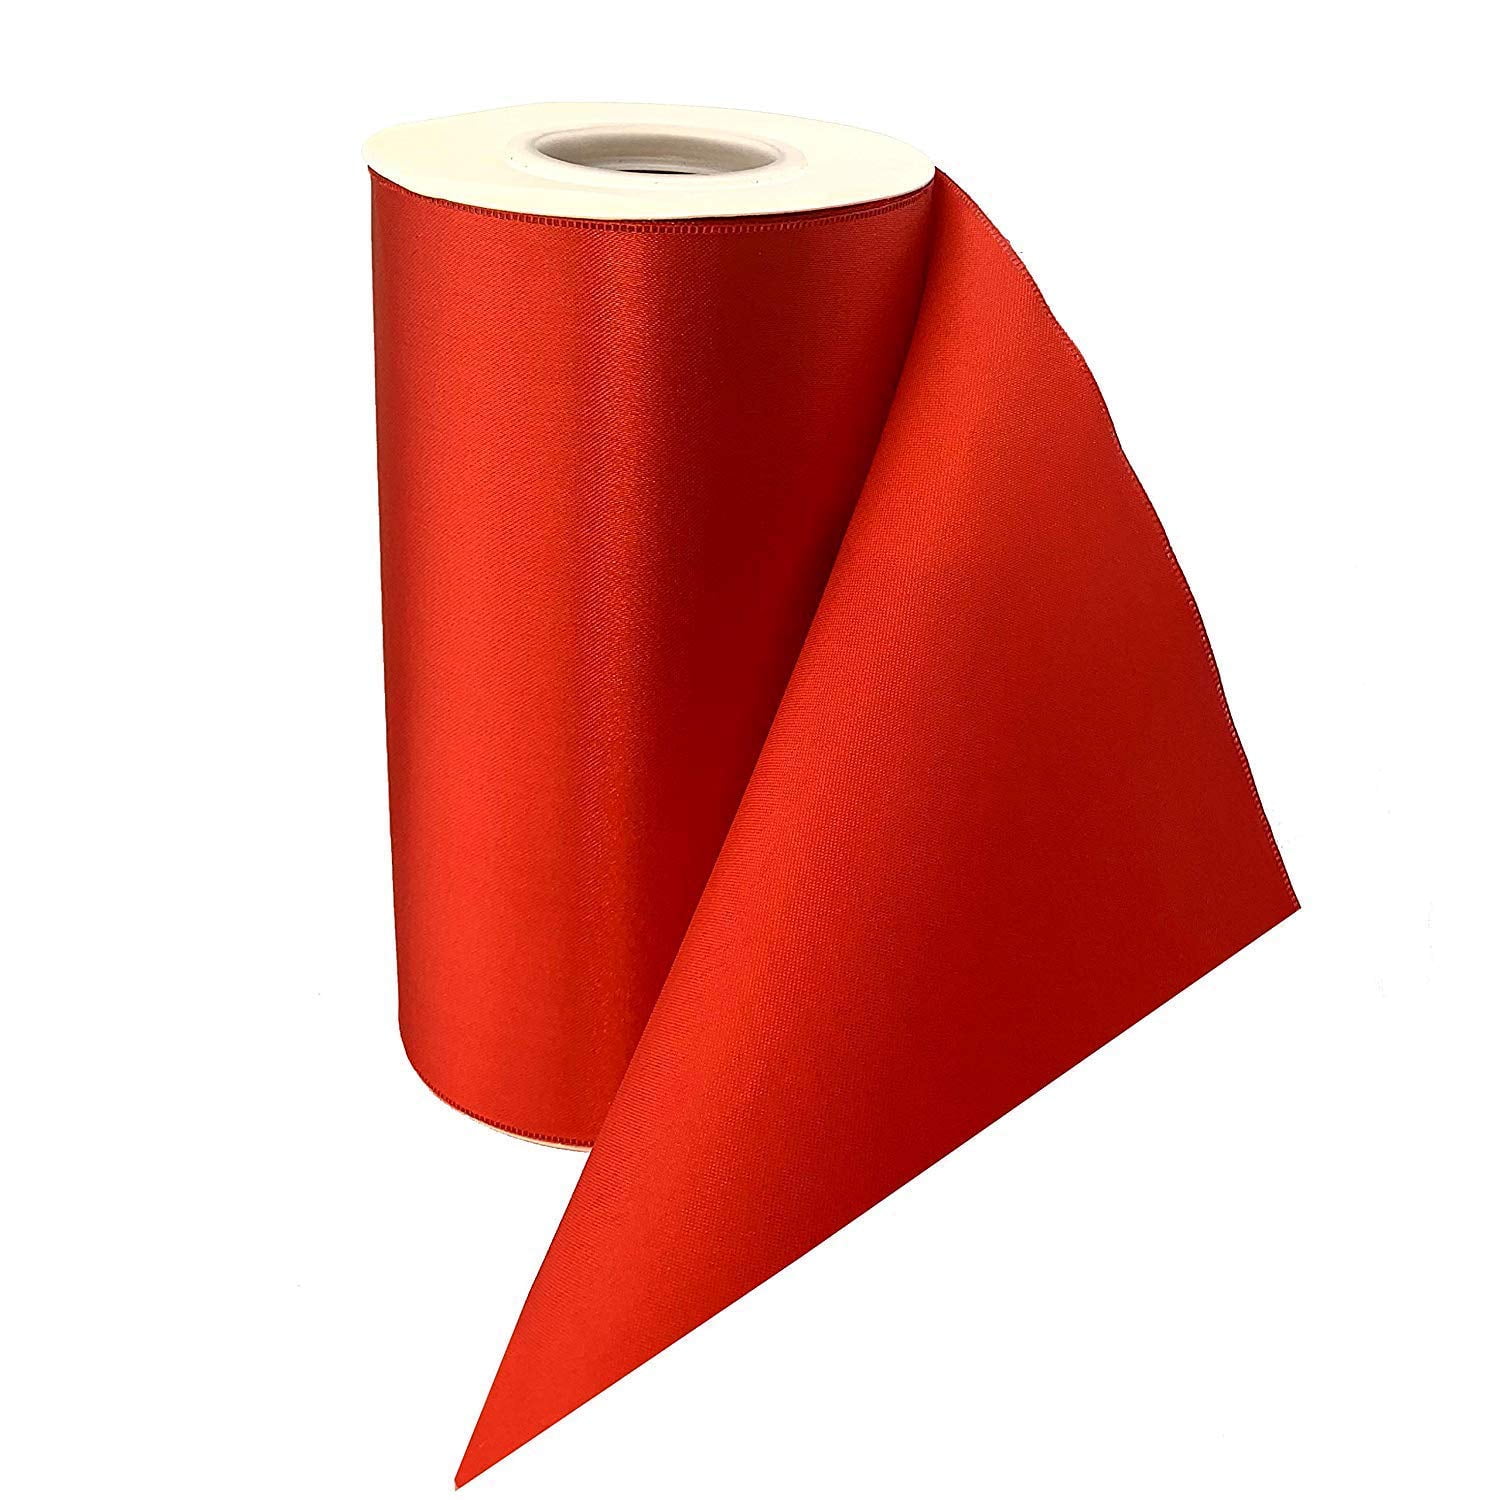  Red Ribbon 1 Inch x 25 Yards, Satin Fabric Silk